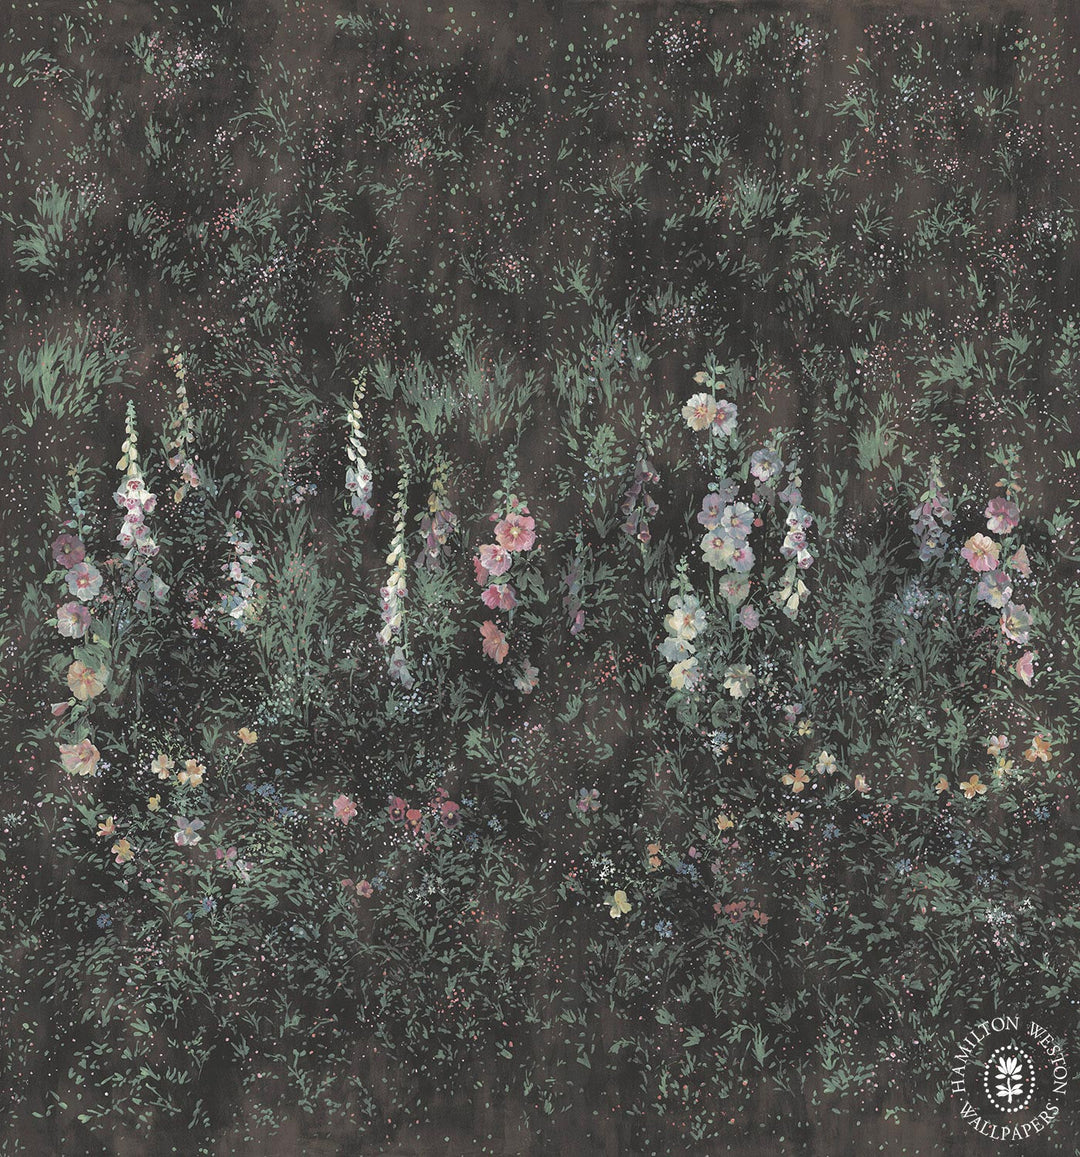 Flora-Roberts-wallpaper-Hamilton-Weston-mightnight-garden-twinkling-flowers-hand-illustrated-mural-foxgloves-black-background-pastel-tones-faded-background-01-spring